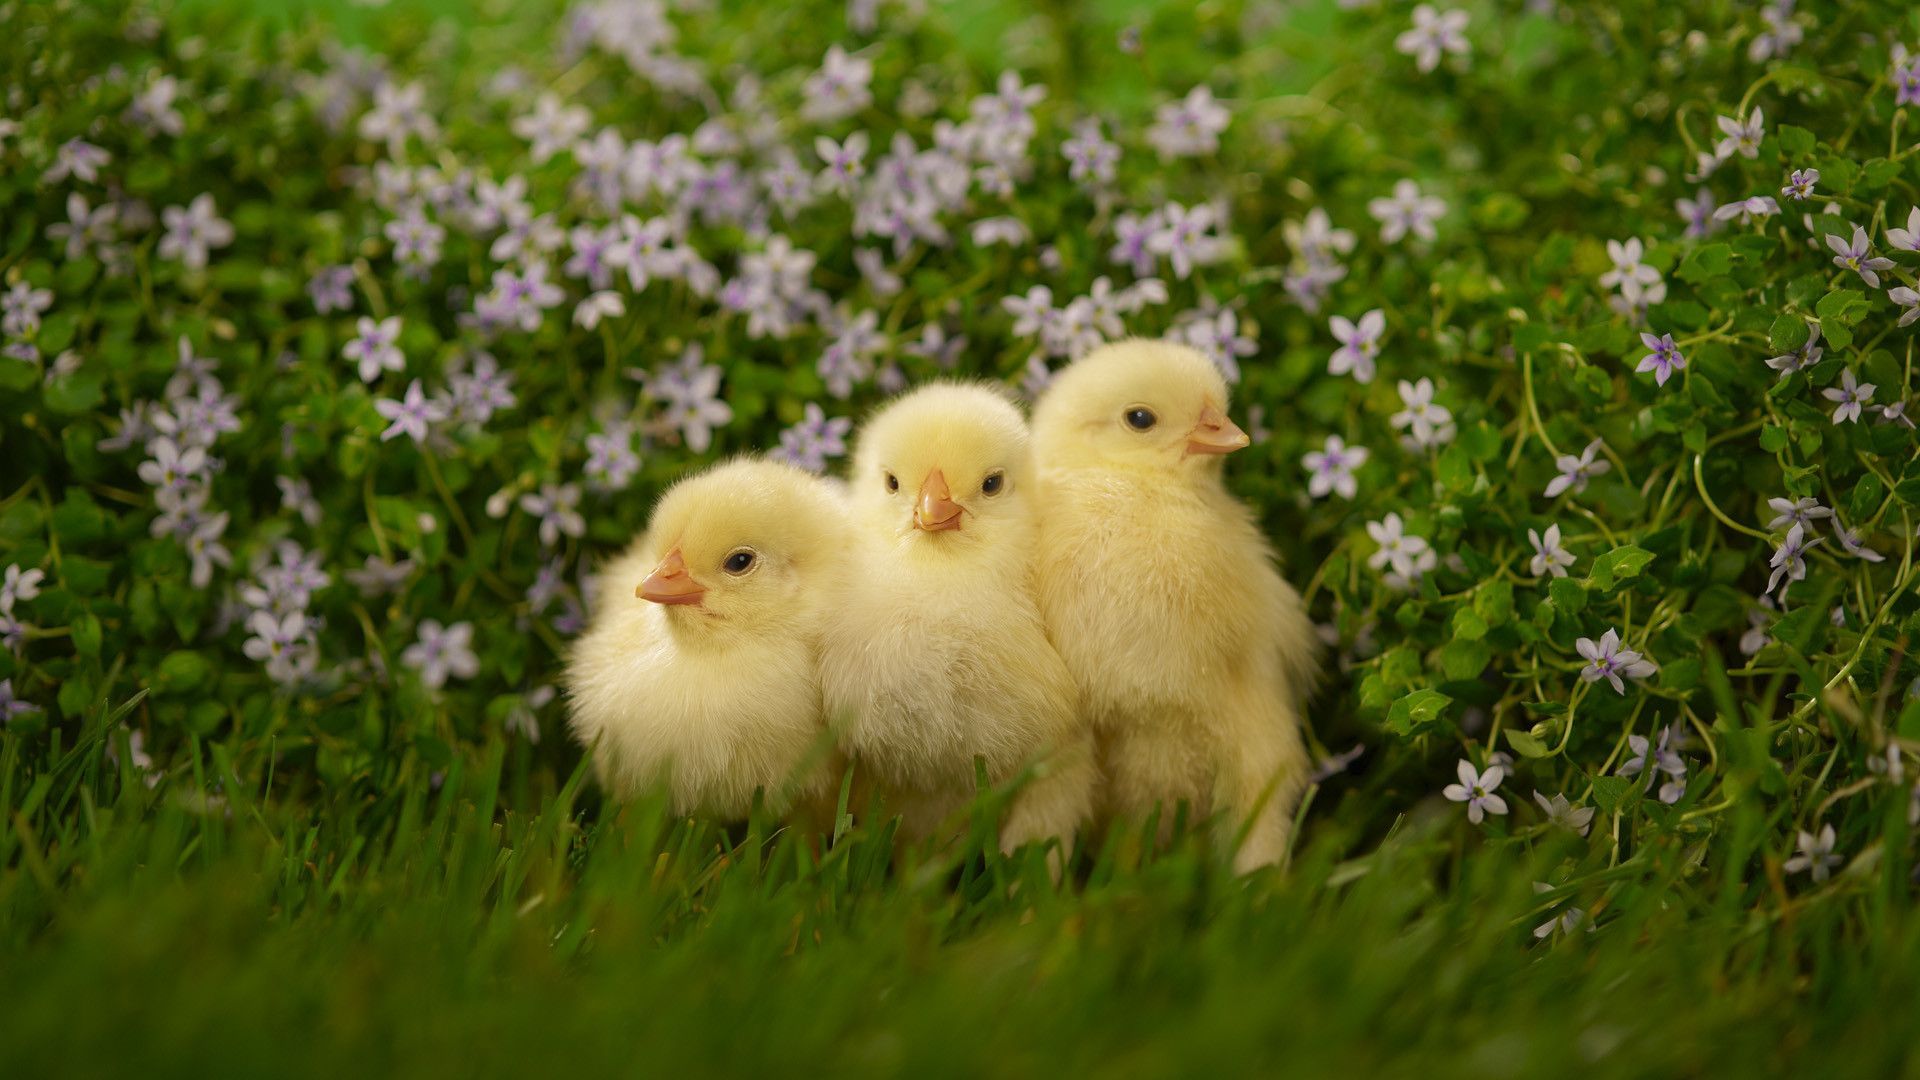 Spring Animals Desktop Wallpaper background picture. Baby chickens, Spring animals, Cute baby animals